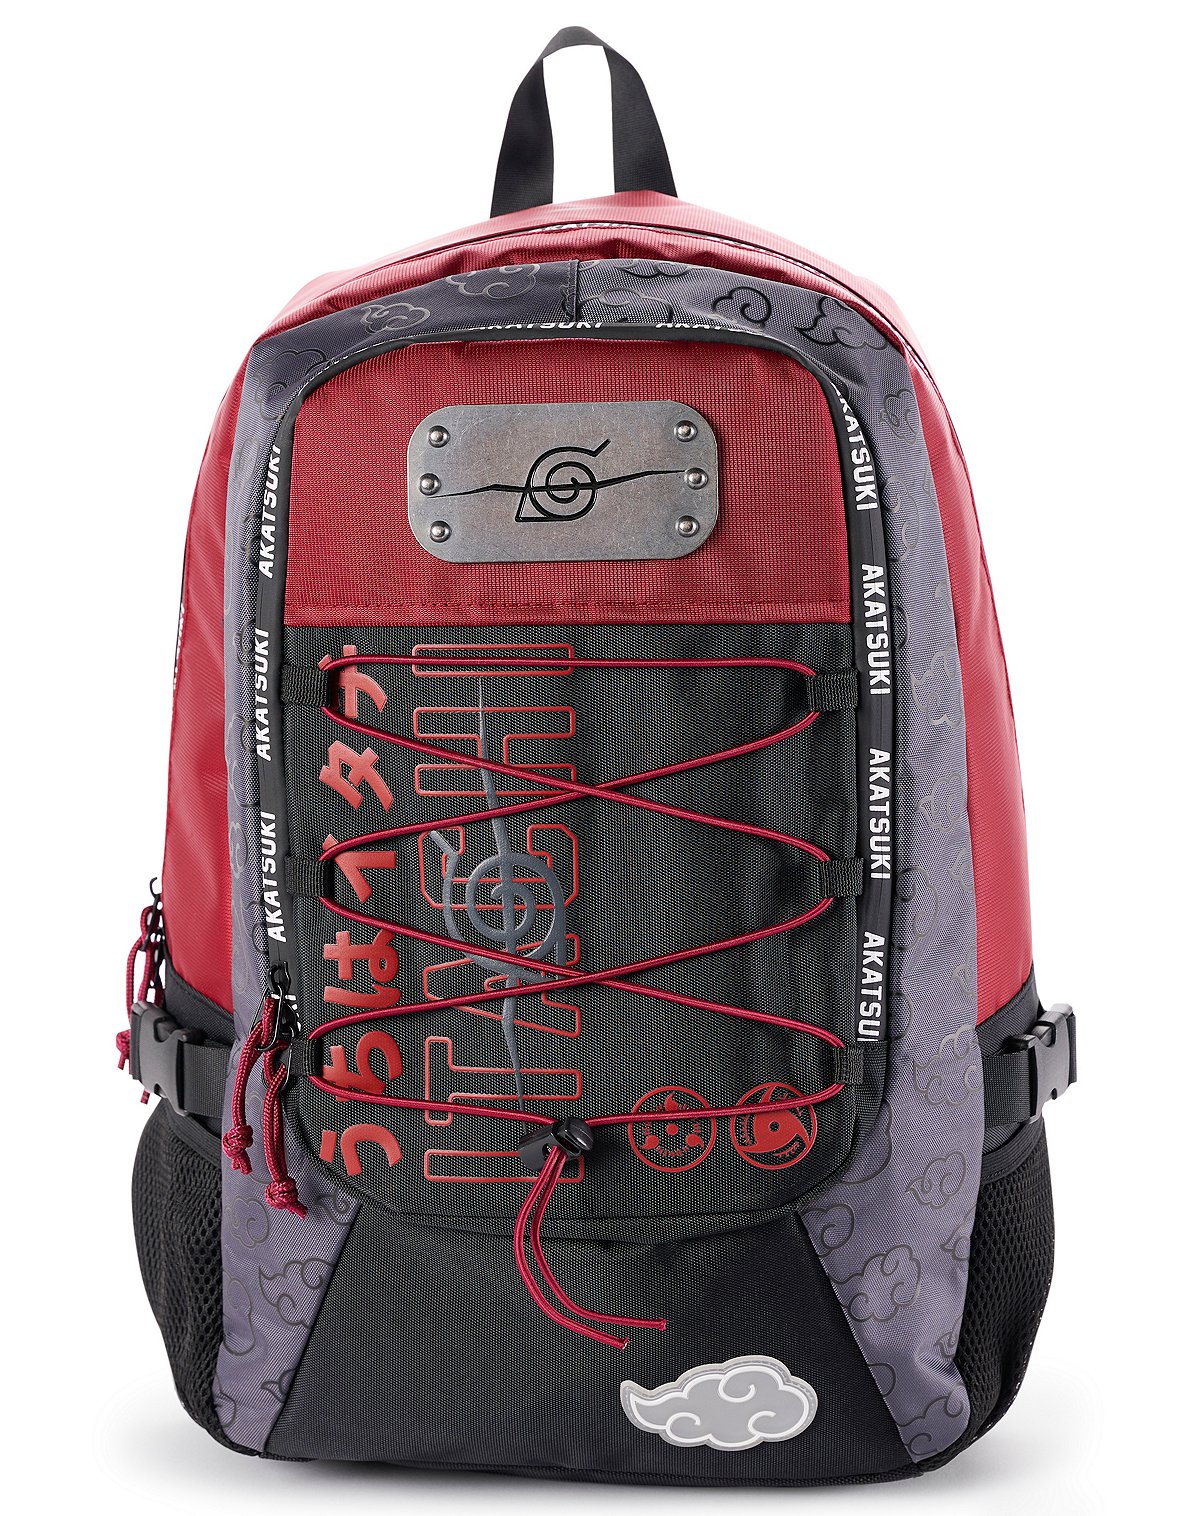 Itachi Built-Up Backpack